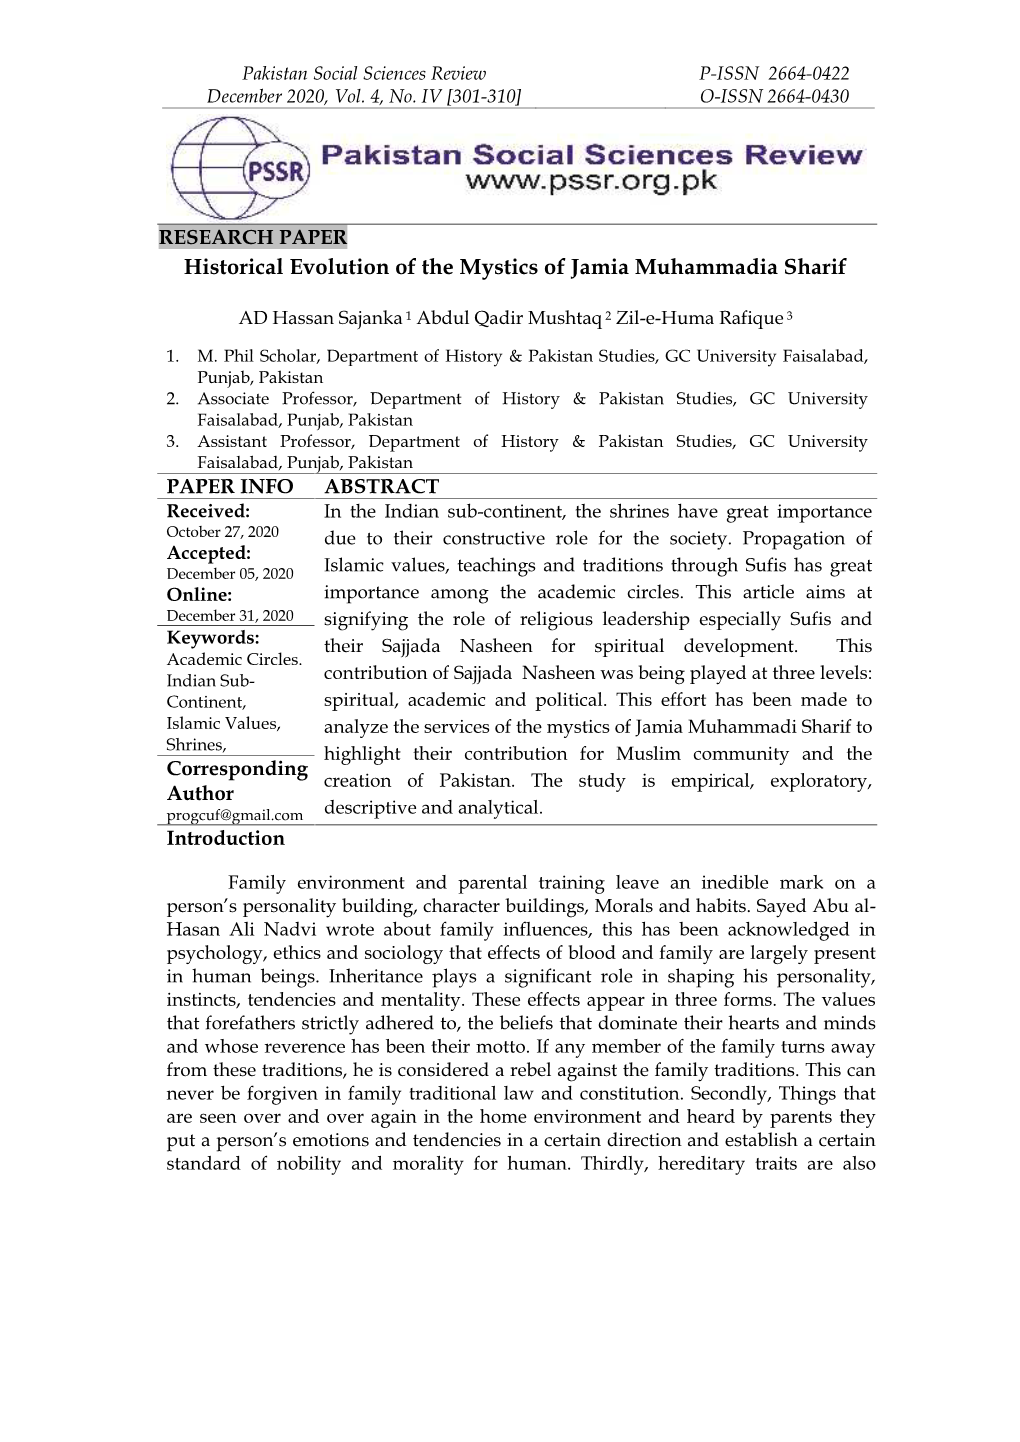 Historical Evolution of the Mystics of Jamia Muhammadia Sharif